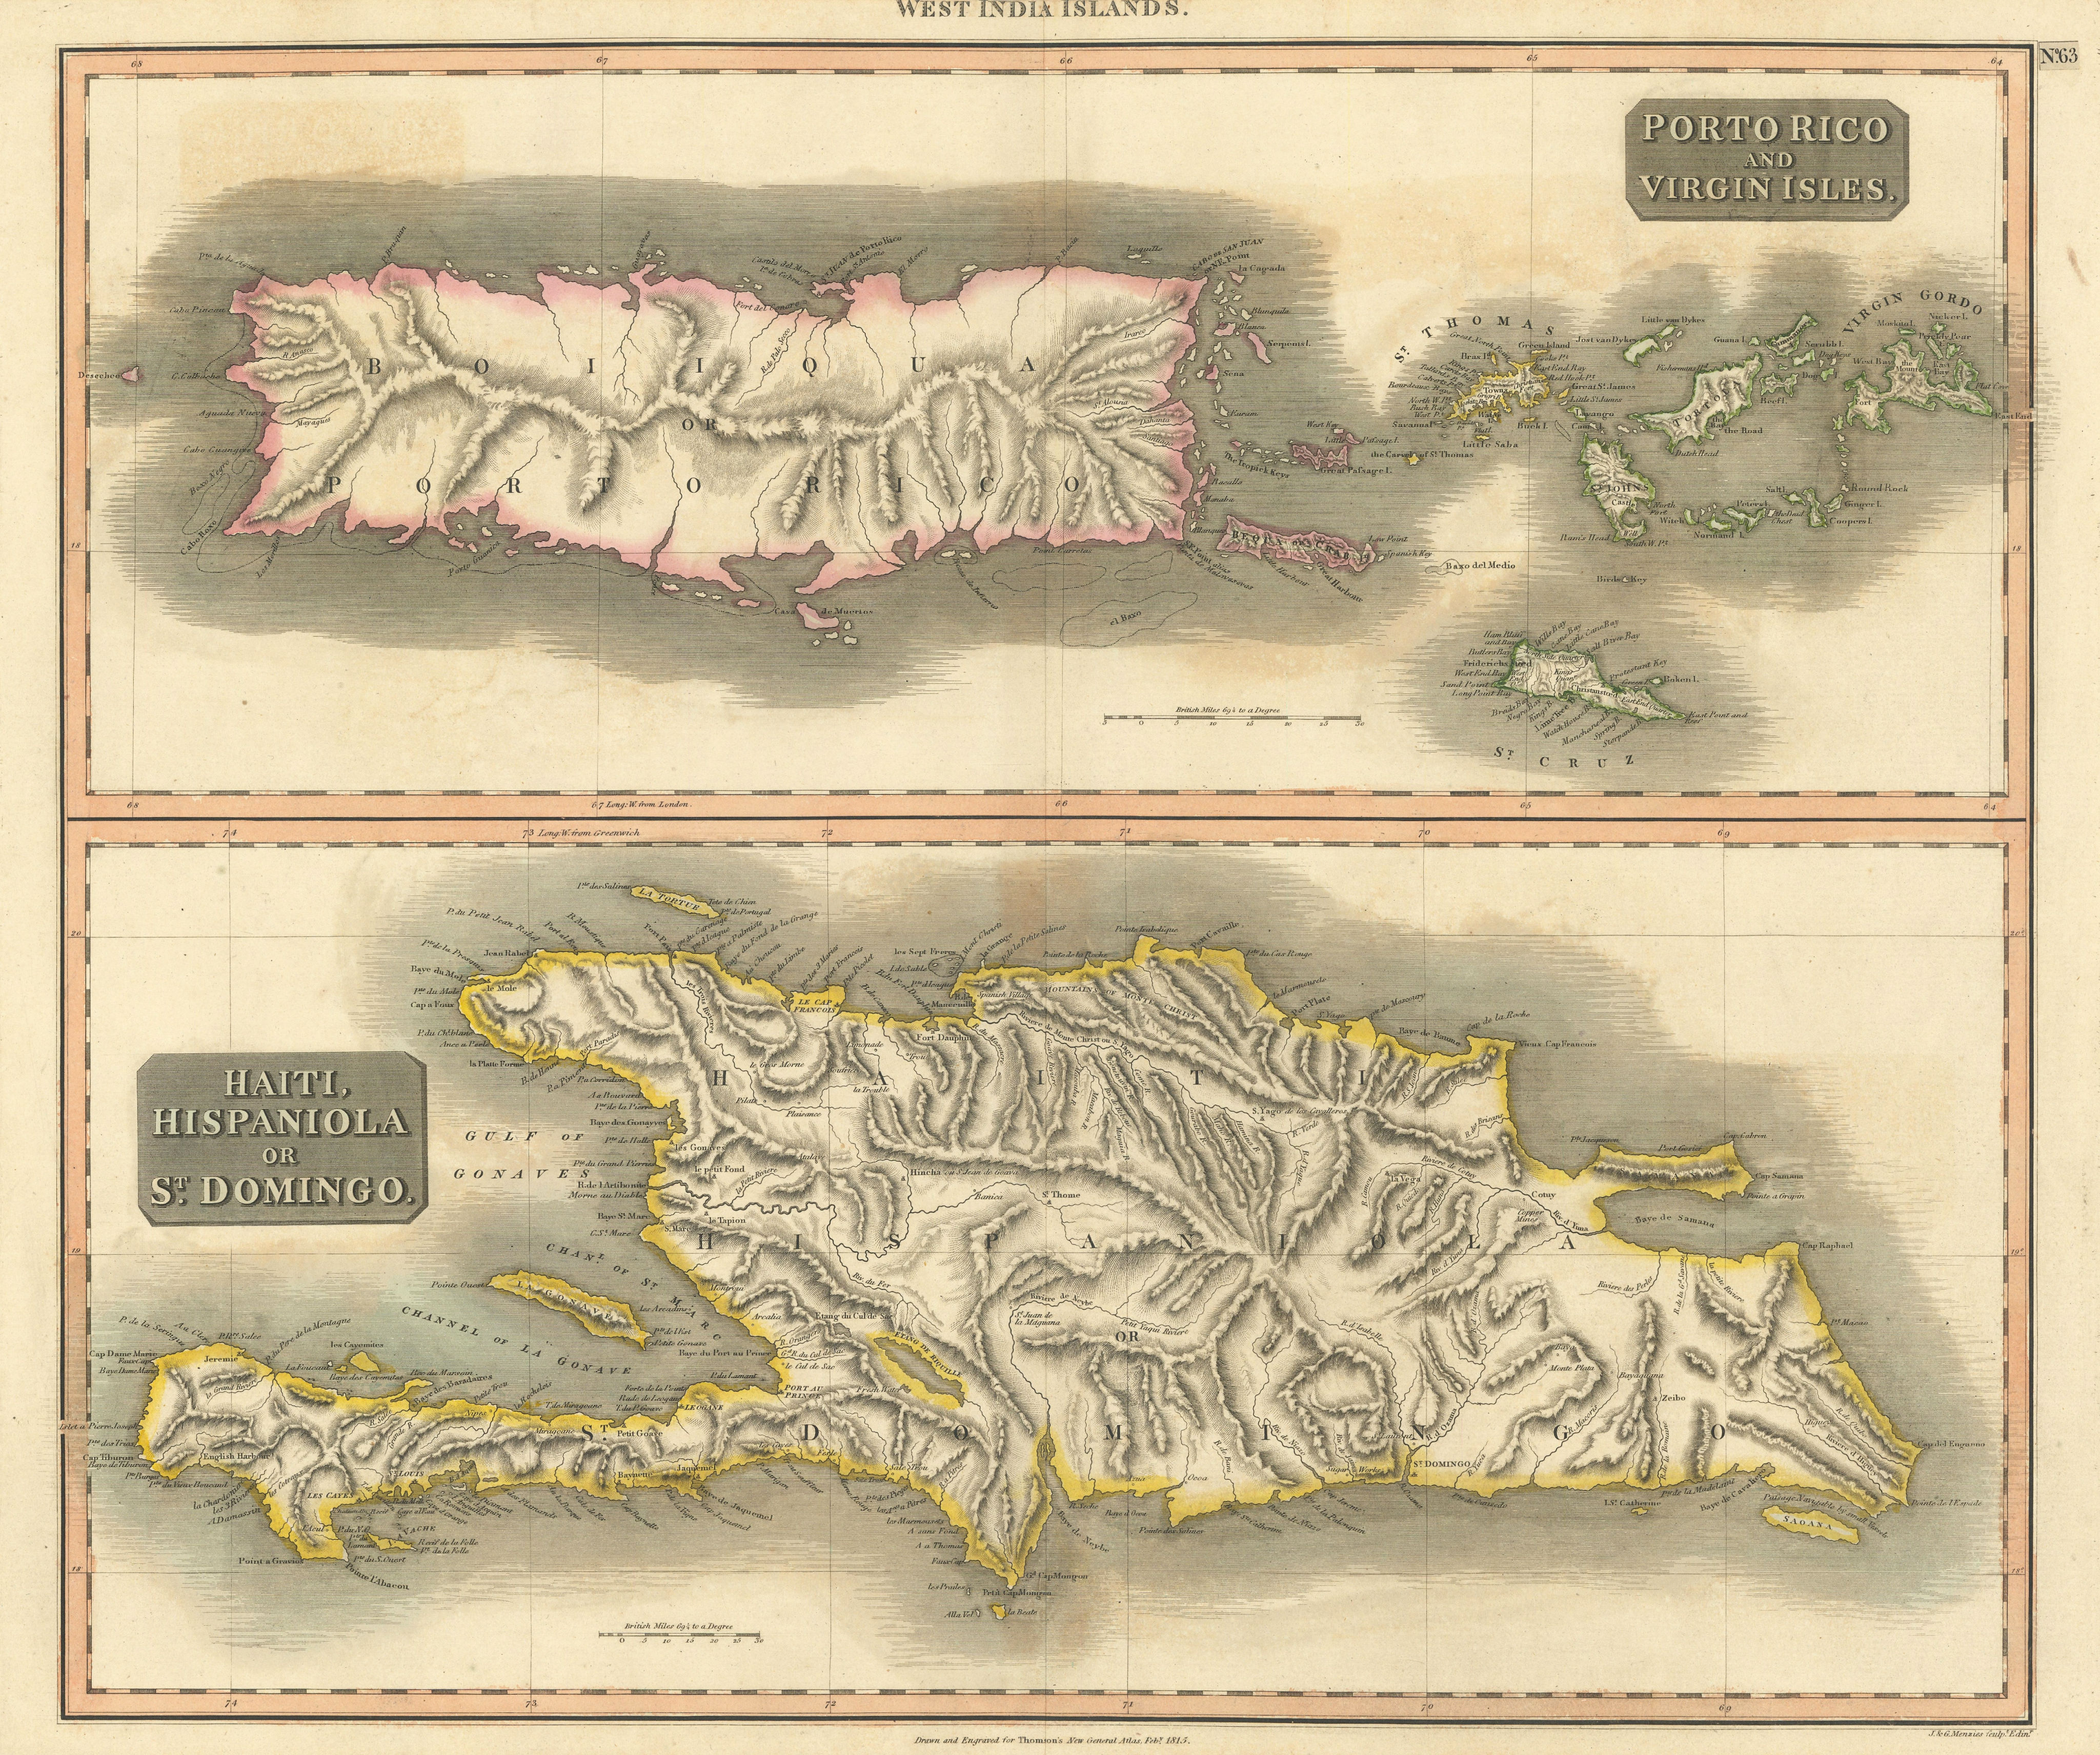 Associate Product Puerto Rico & Virgin Islands. Haiti, Hispaniola or St. Domingo. THOMSON 1817 map